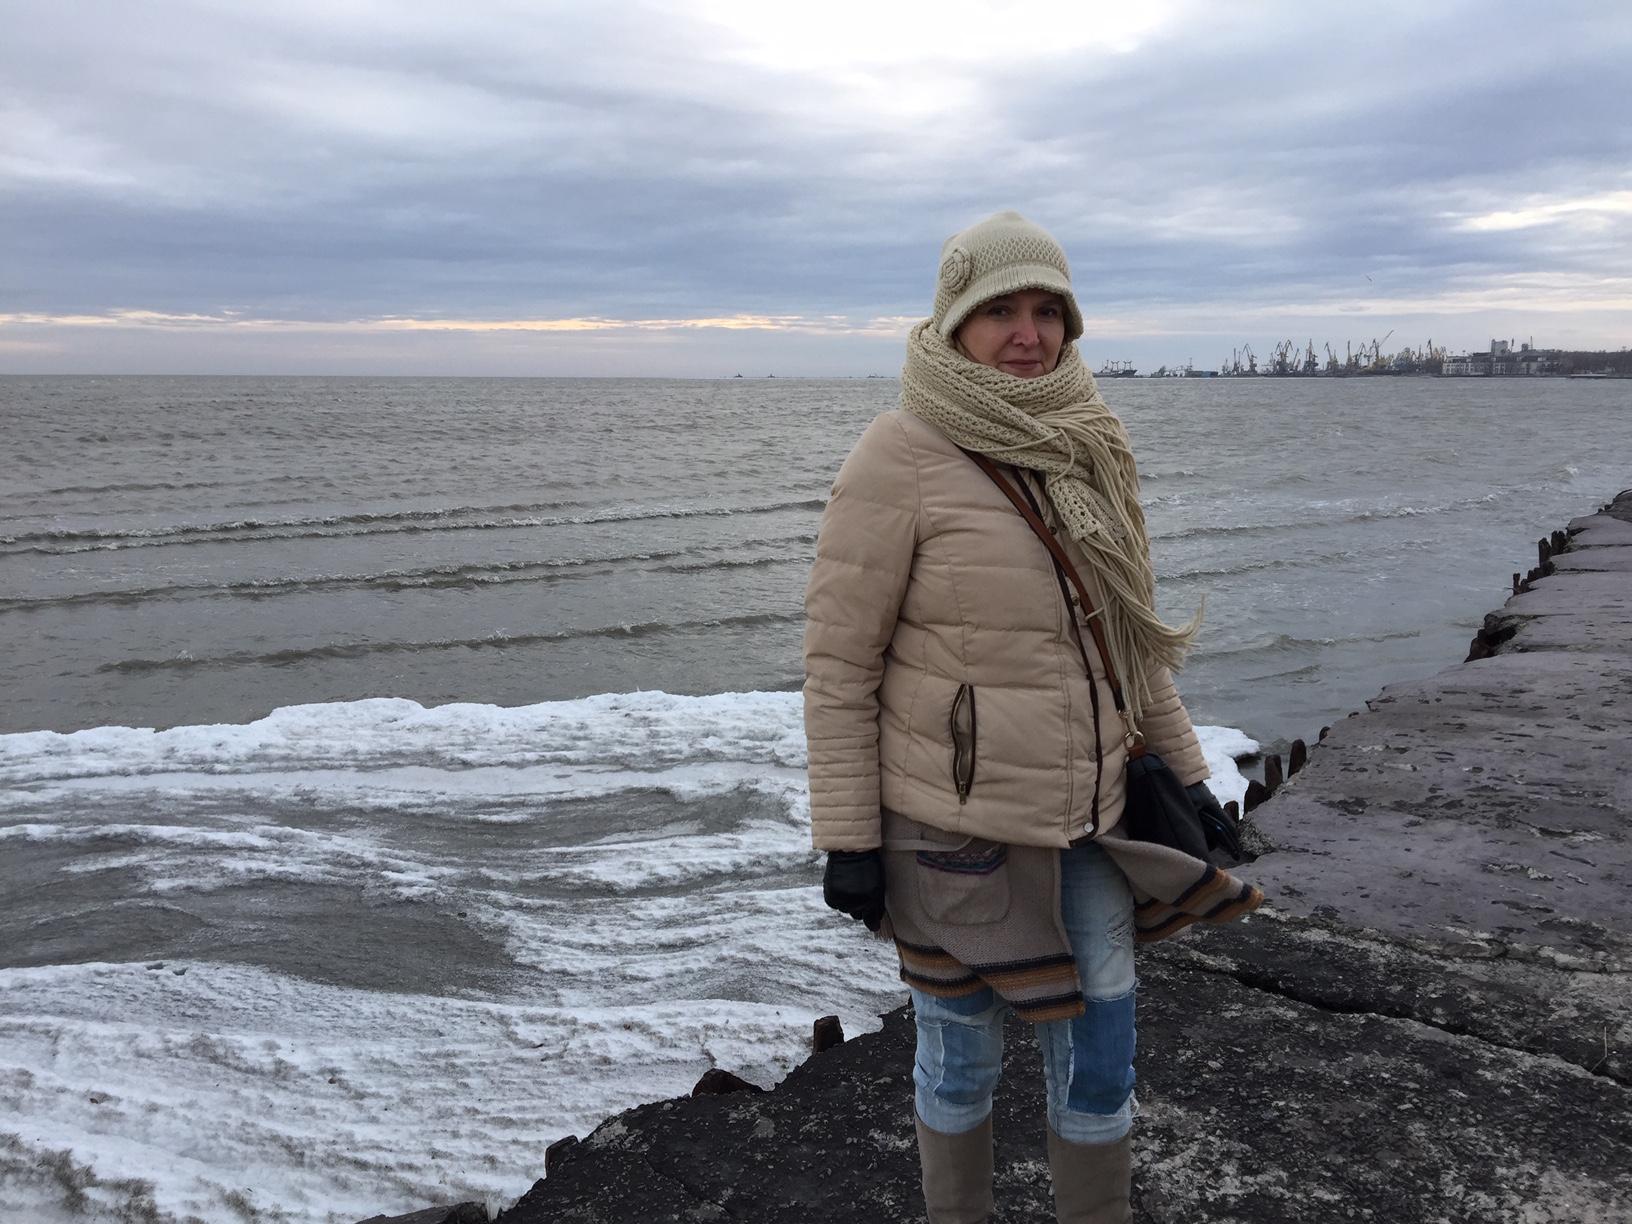 ‘I’ve worked here 32 years and what’s happening breaks my heart,’ says Marina Pereshevalevo